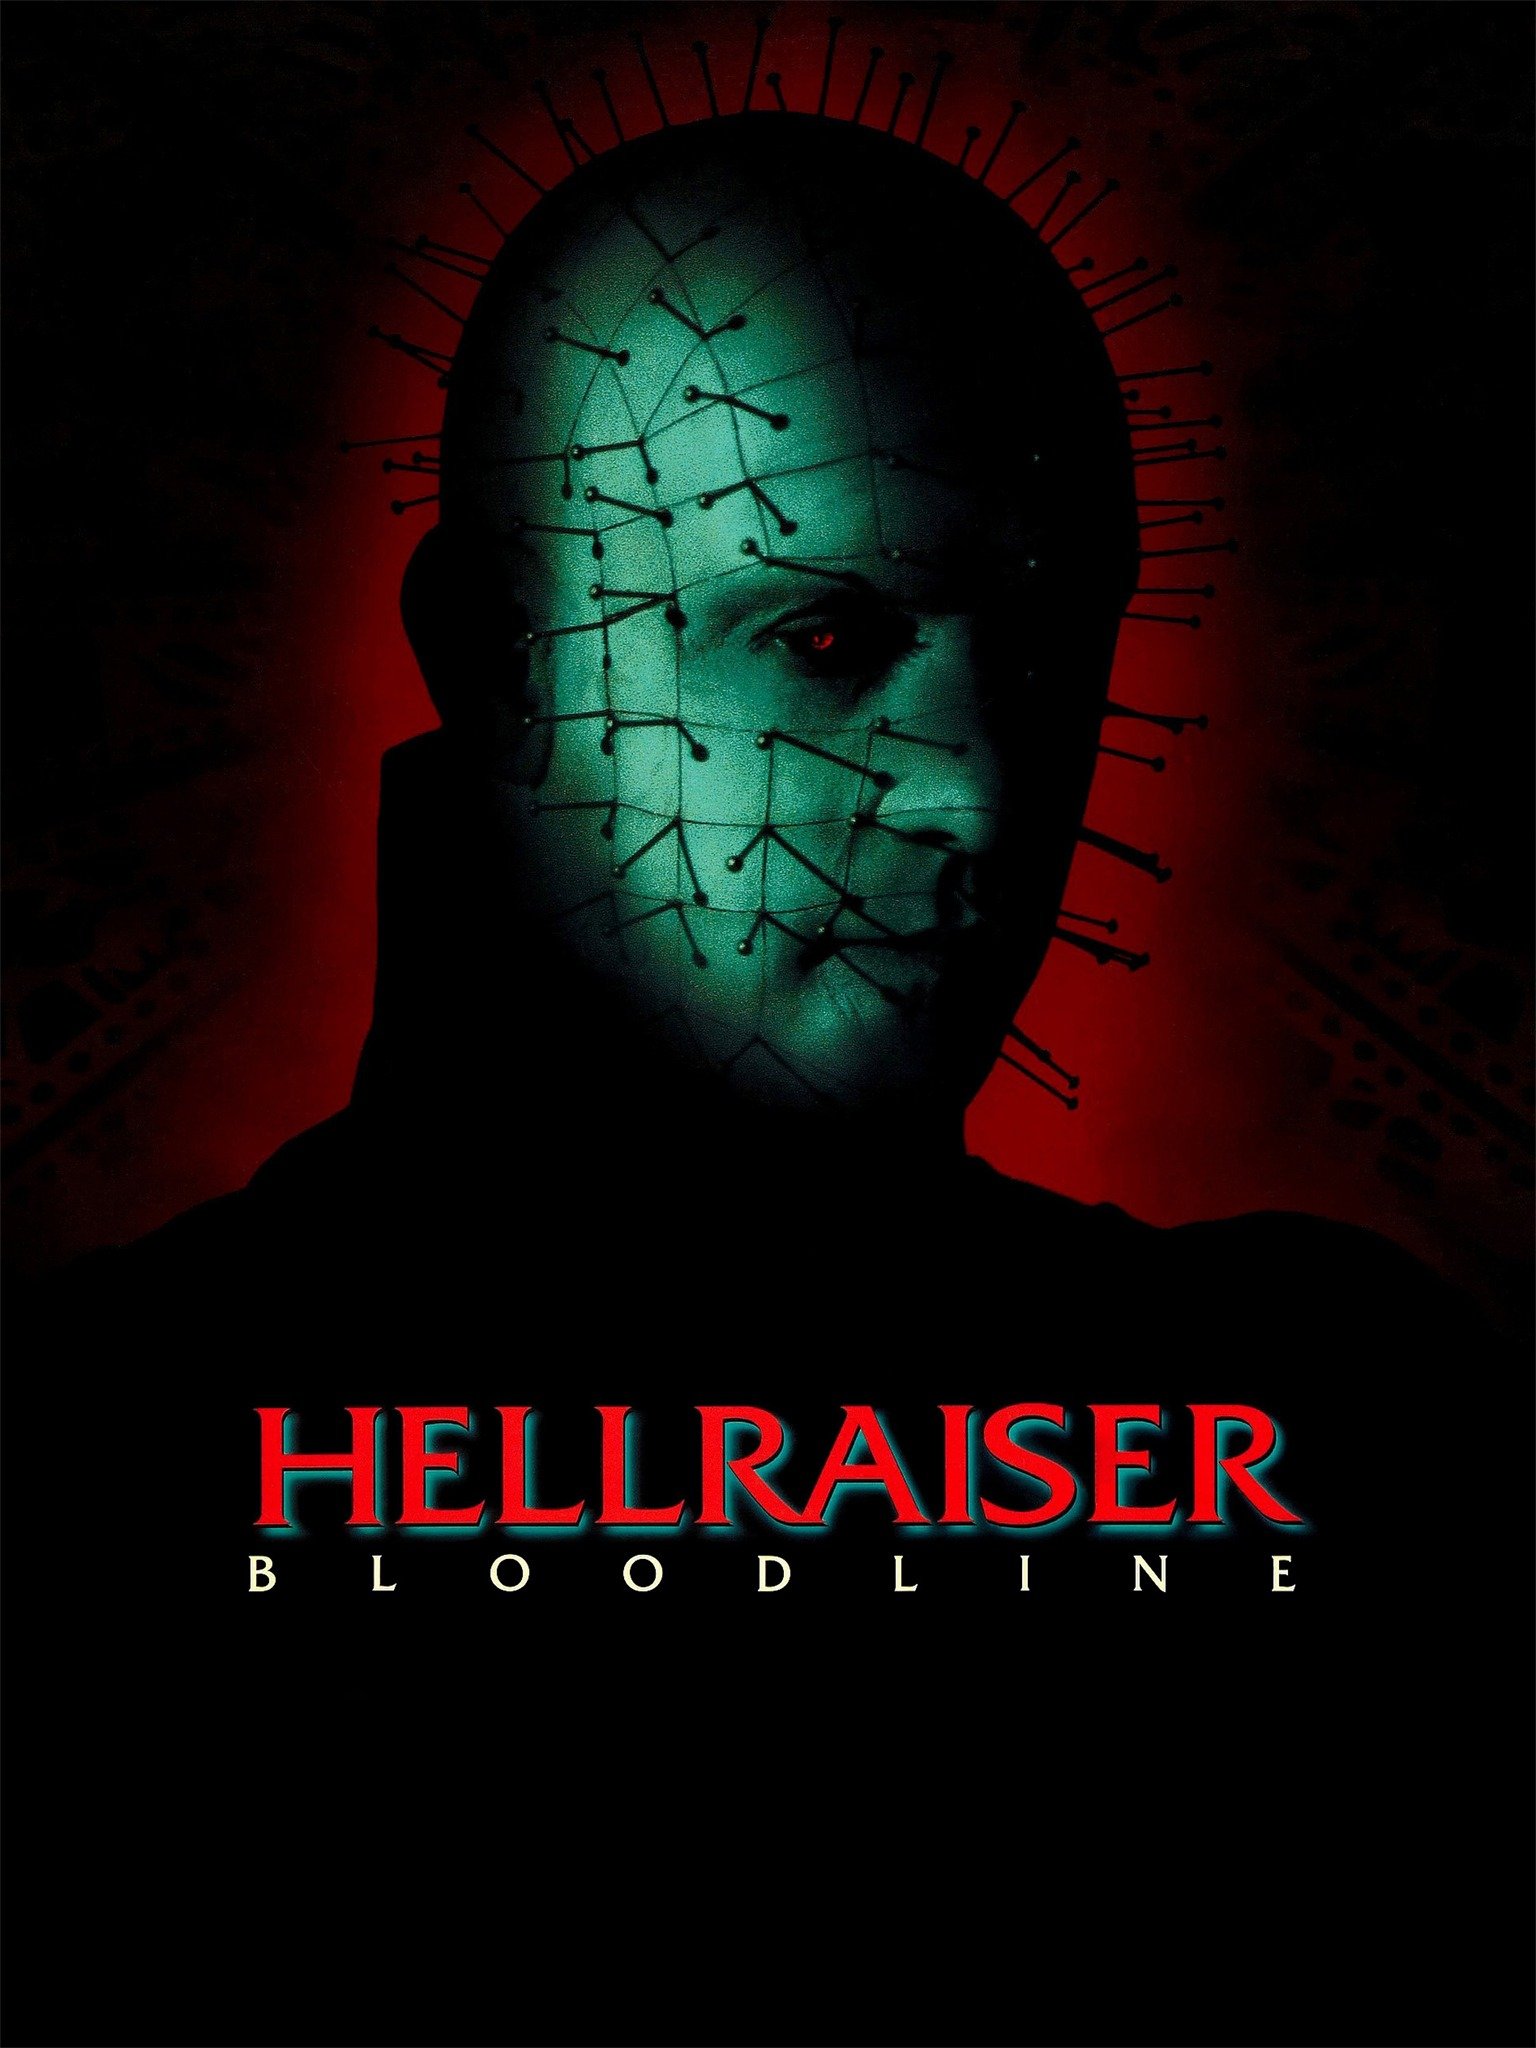 31 Days, 31 Hororr Reviews Day 6: Hellraiser IV: Bloodline.